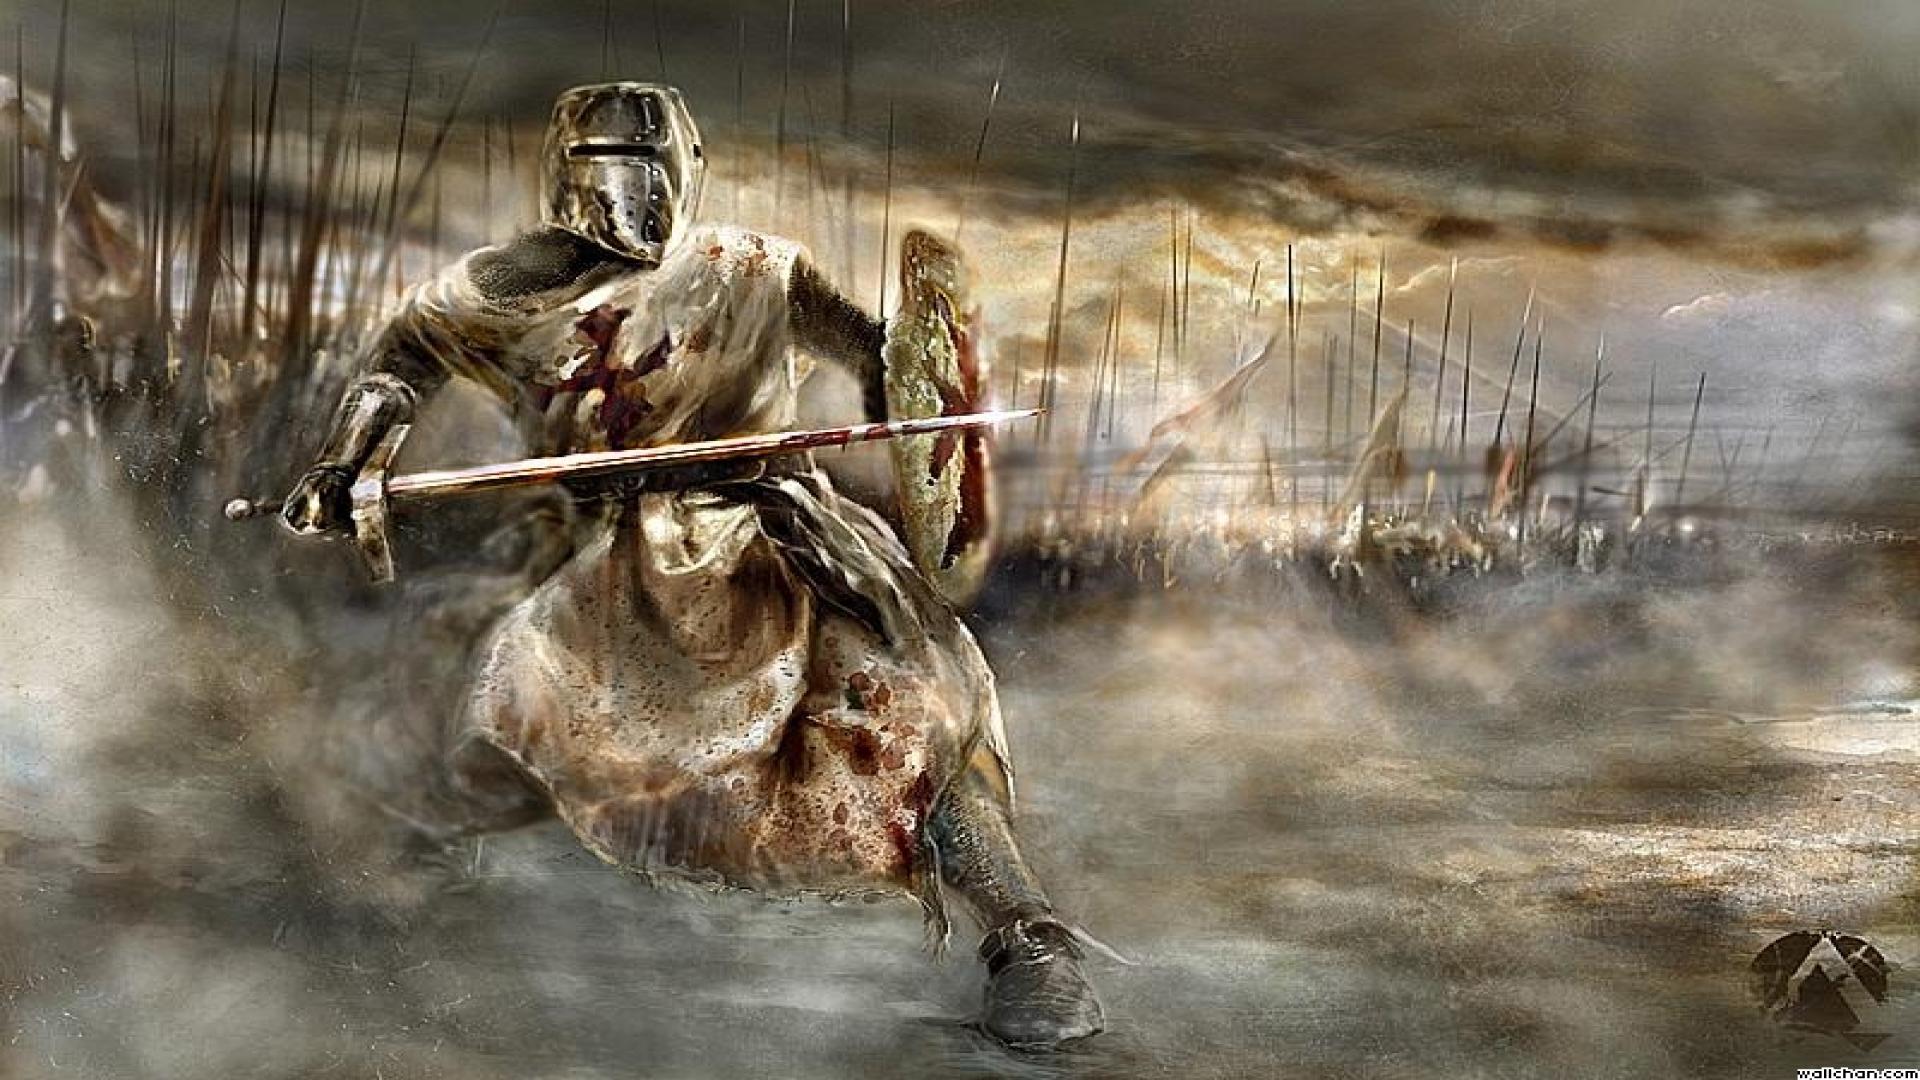 And Blade Fantasy Warrior Armor Knight Battle E Wallpaper Background